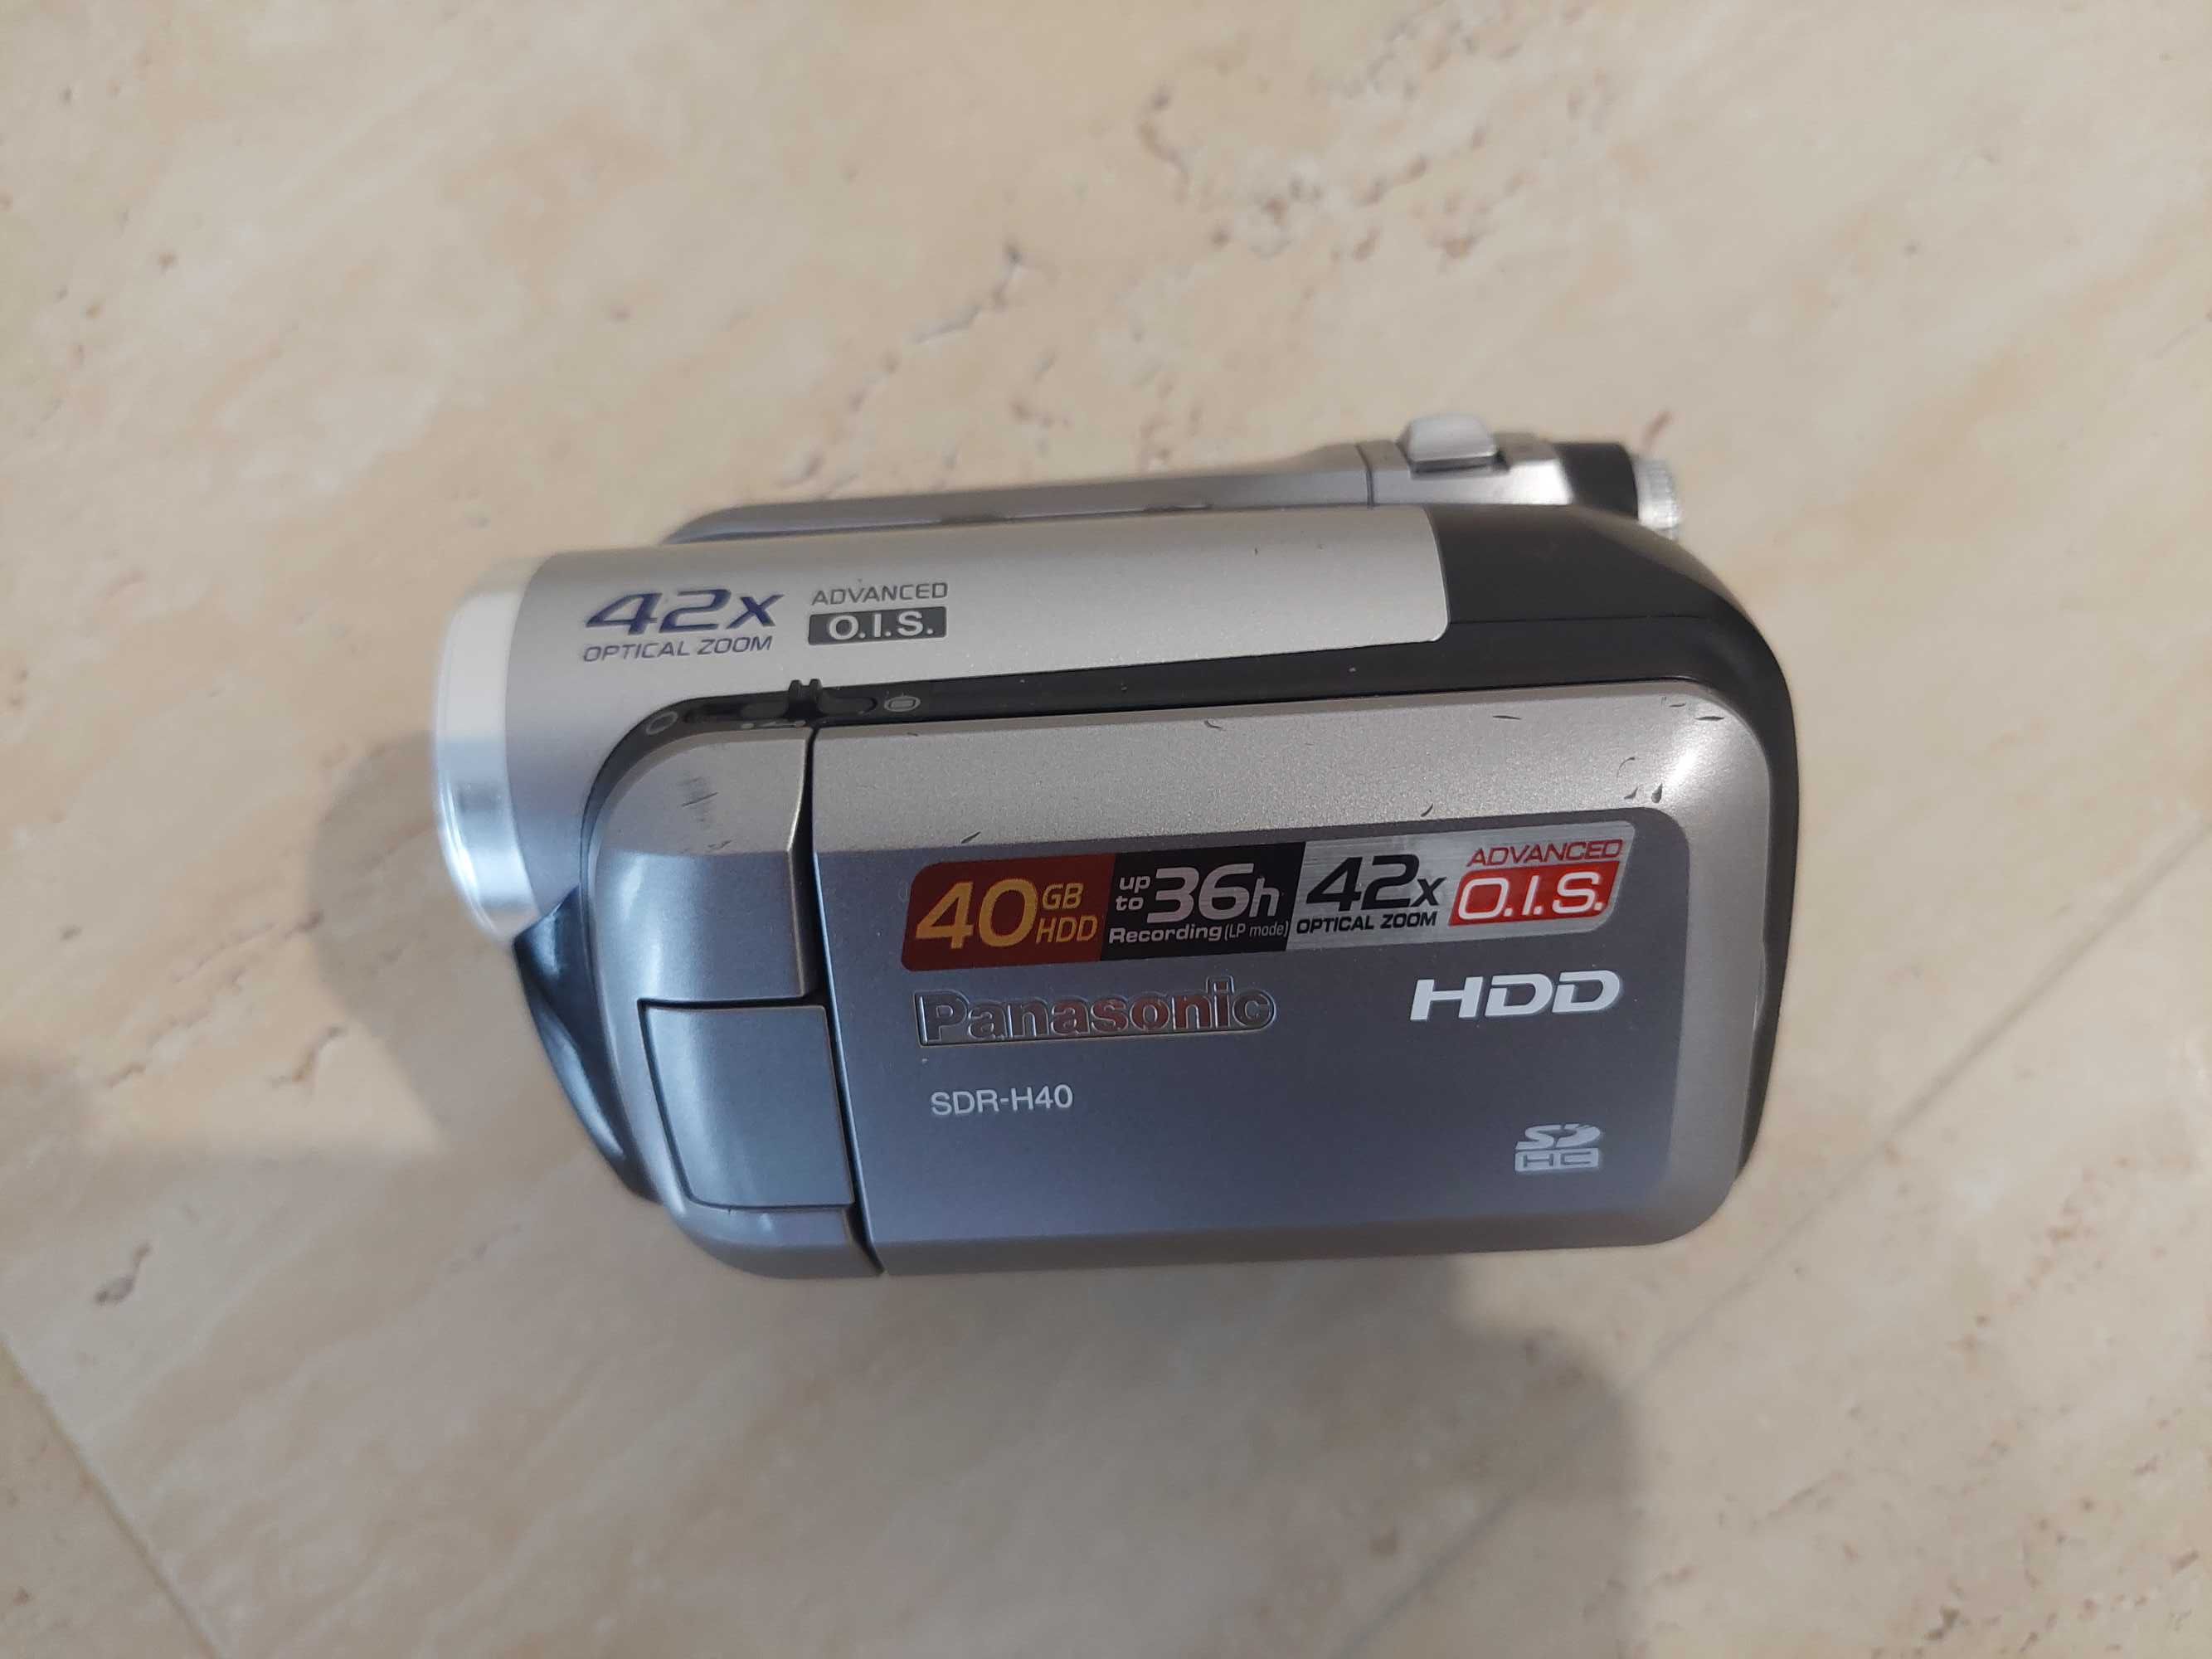 Vand/ofer la schimb-camera Panasonic SDR-H40,HDD40GB,-stare perfecta.